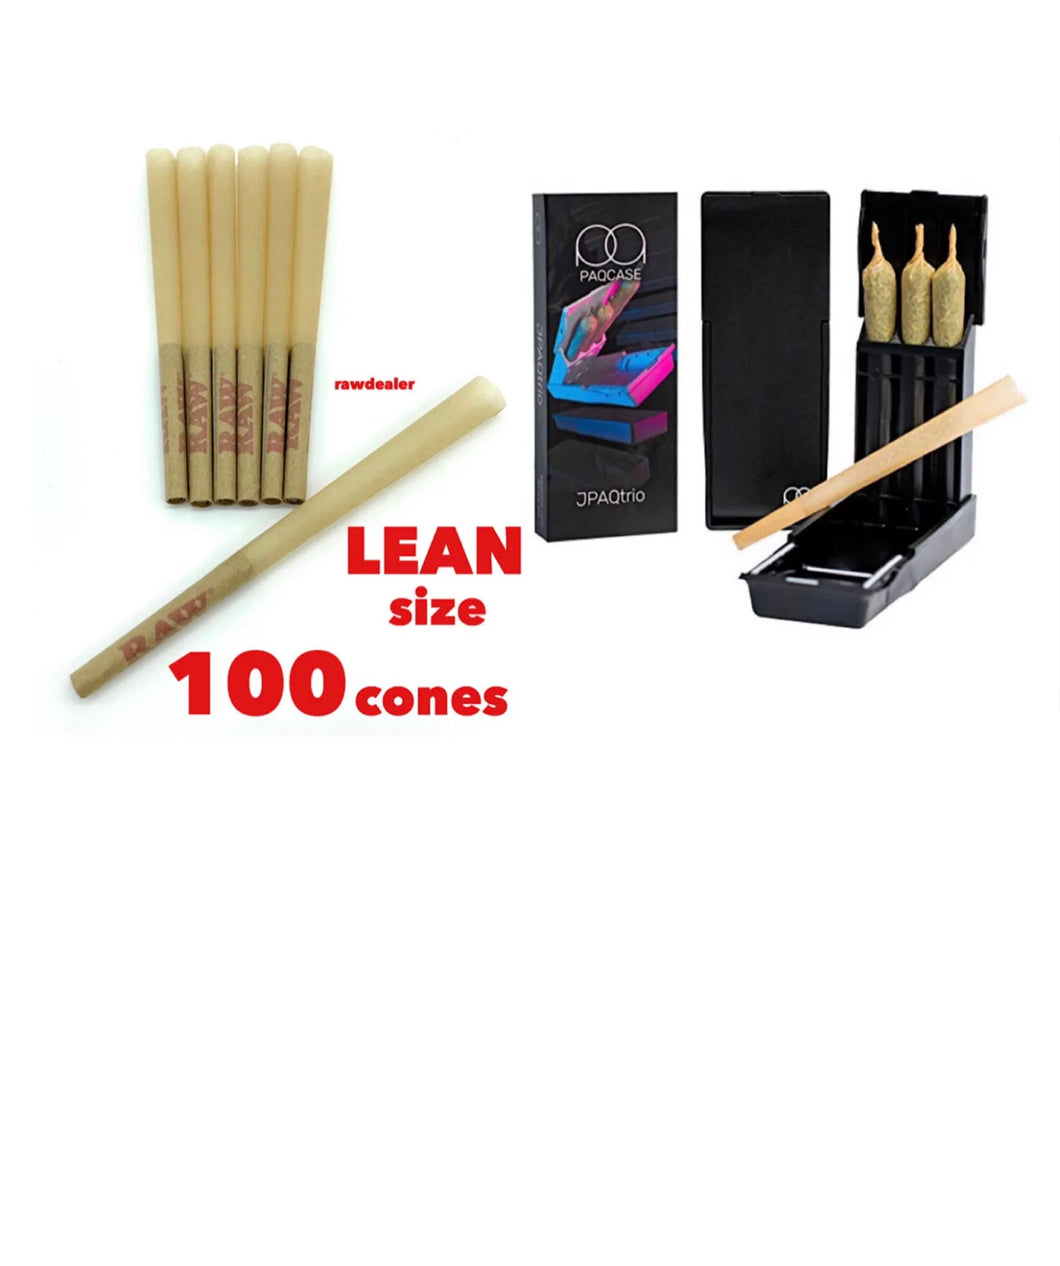 raw cone classic lean size pre rolled cone(100 pack)+JPAQ trio cone holder case